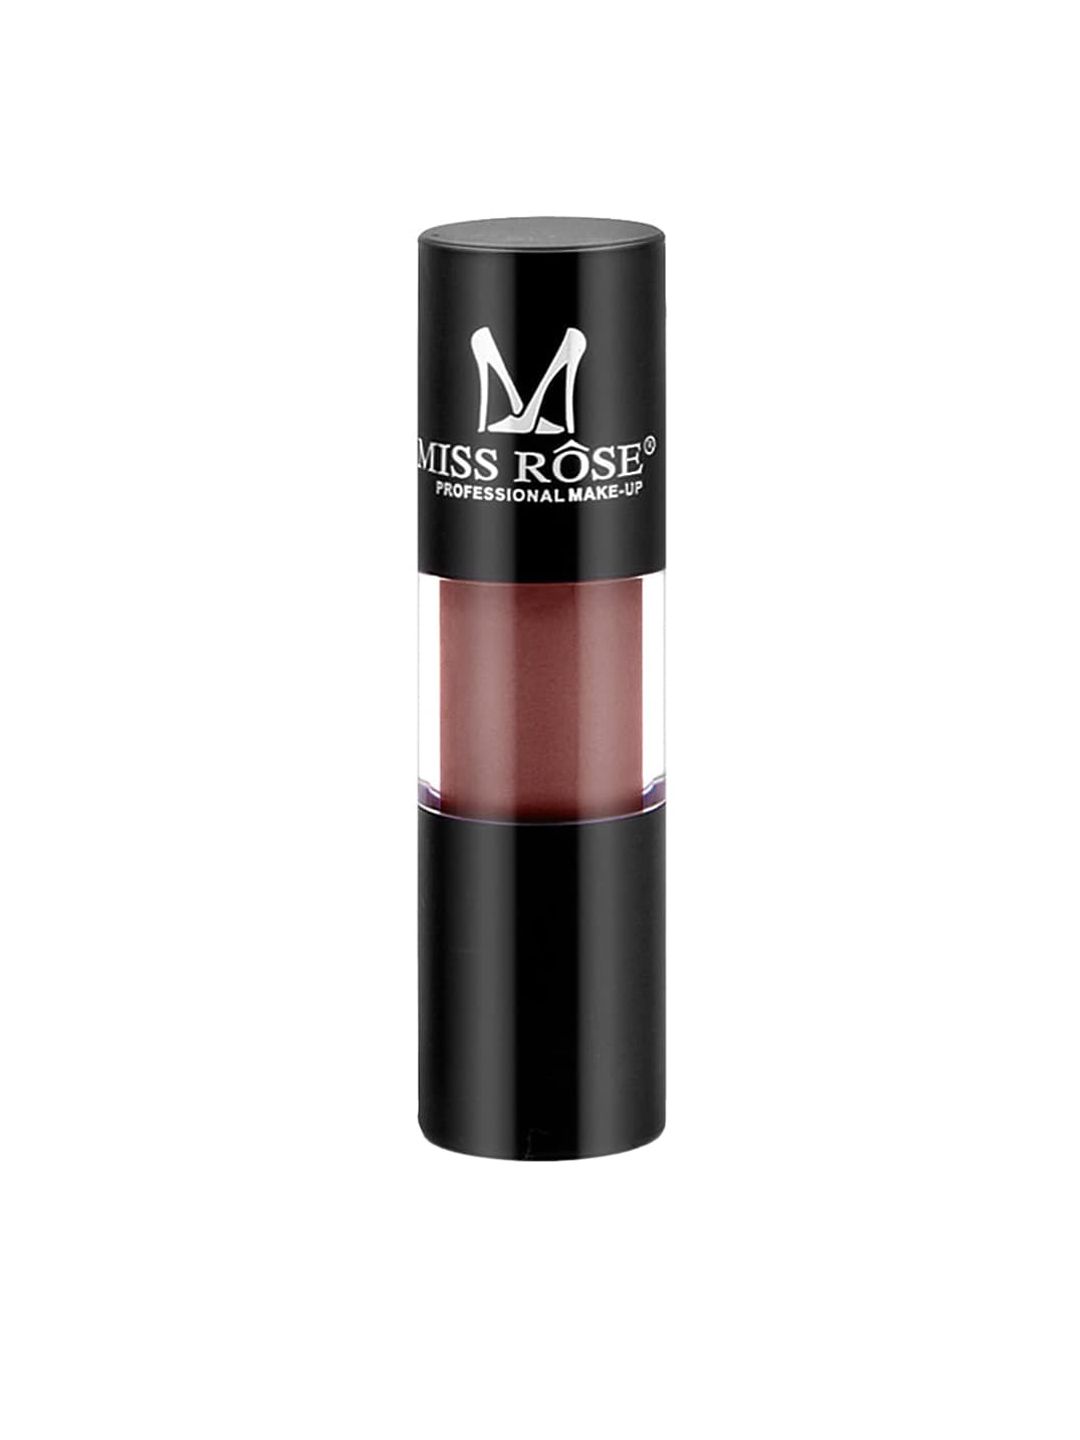 MISS ROSE Matte Liquid LipGloss 7701-023M 02 20 gm Price in India